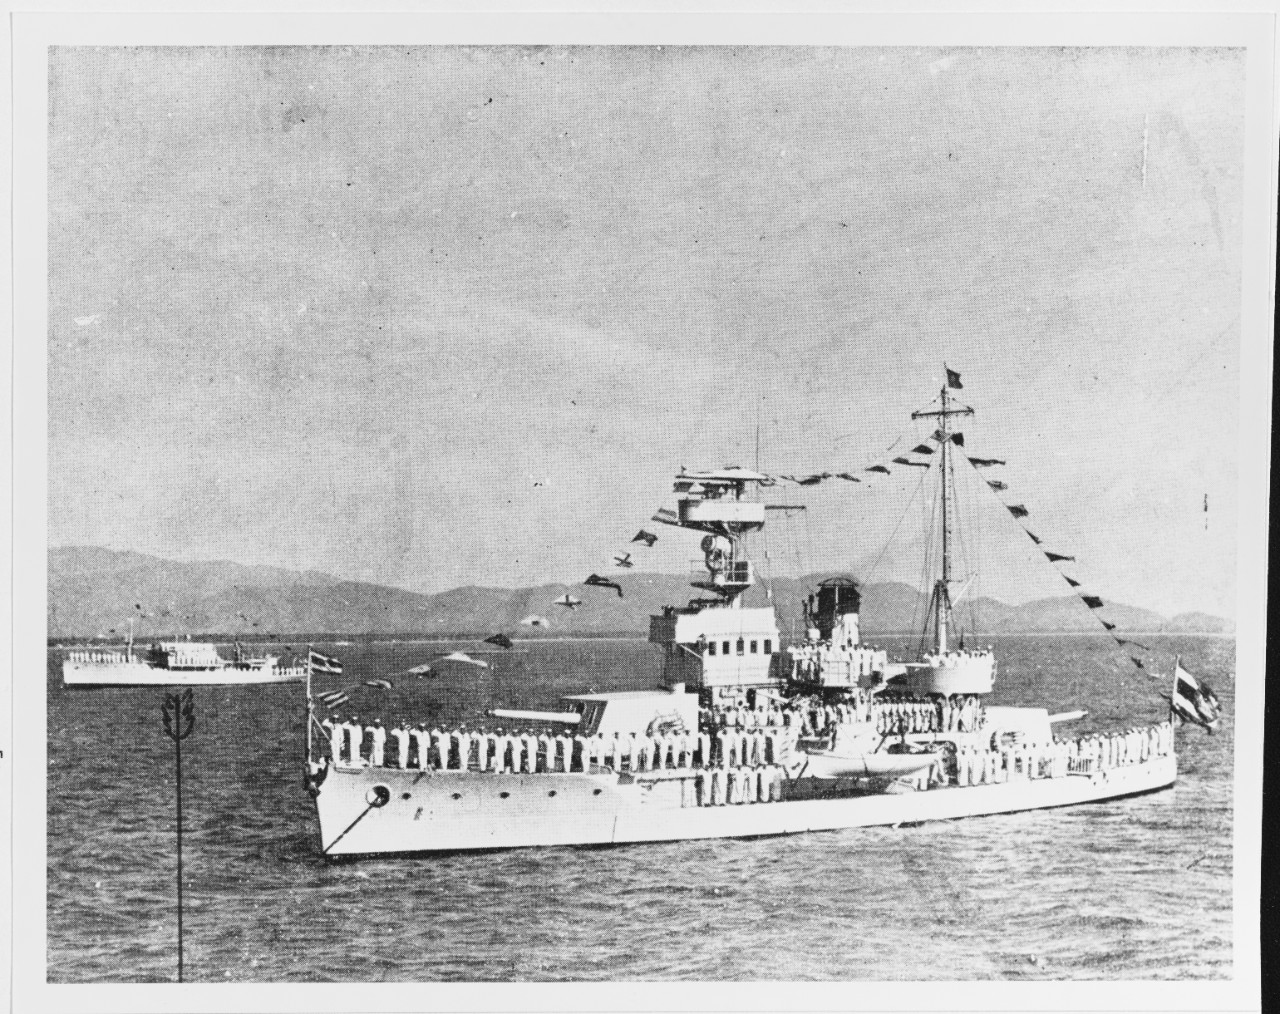 SUKOTHAI (Thai coast defense ship, 1929-1971)